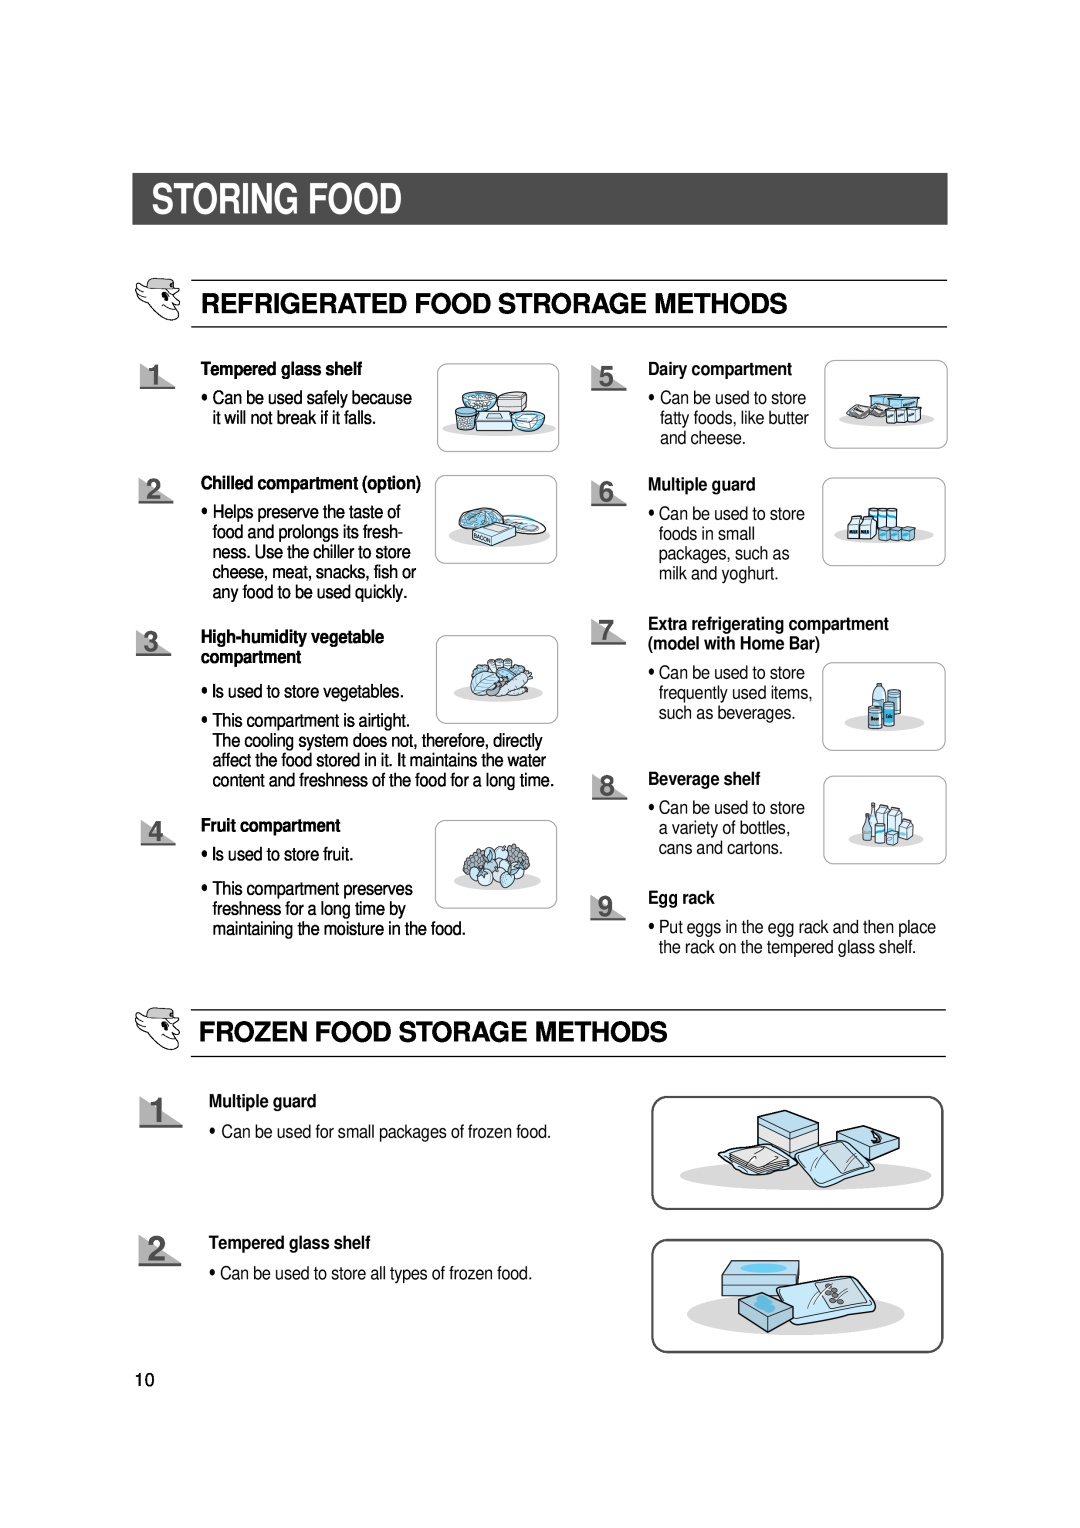 Samsung SR-S22, SR-S20 Storing Food, Refrigerated Food Strorage Methods, Frozen Food Storage Methods, Tempered glass shelf 